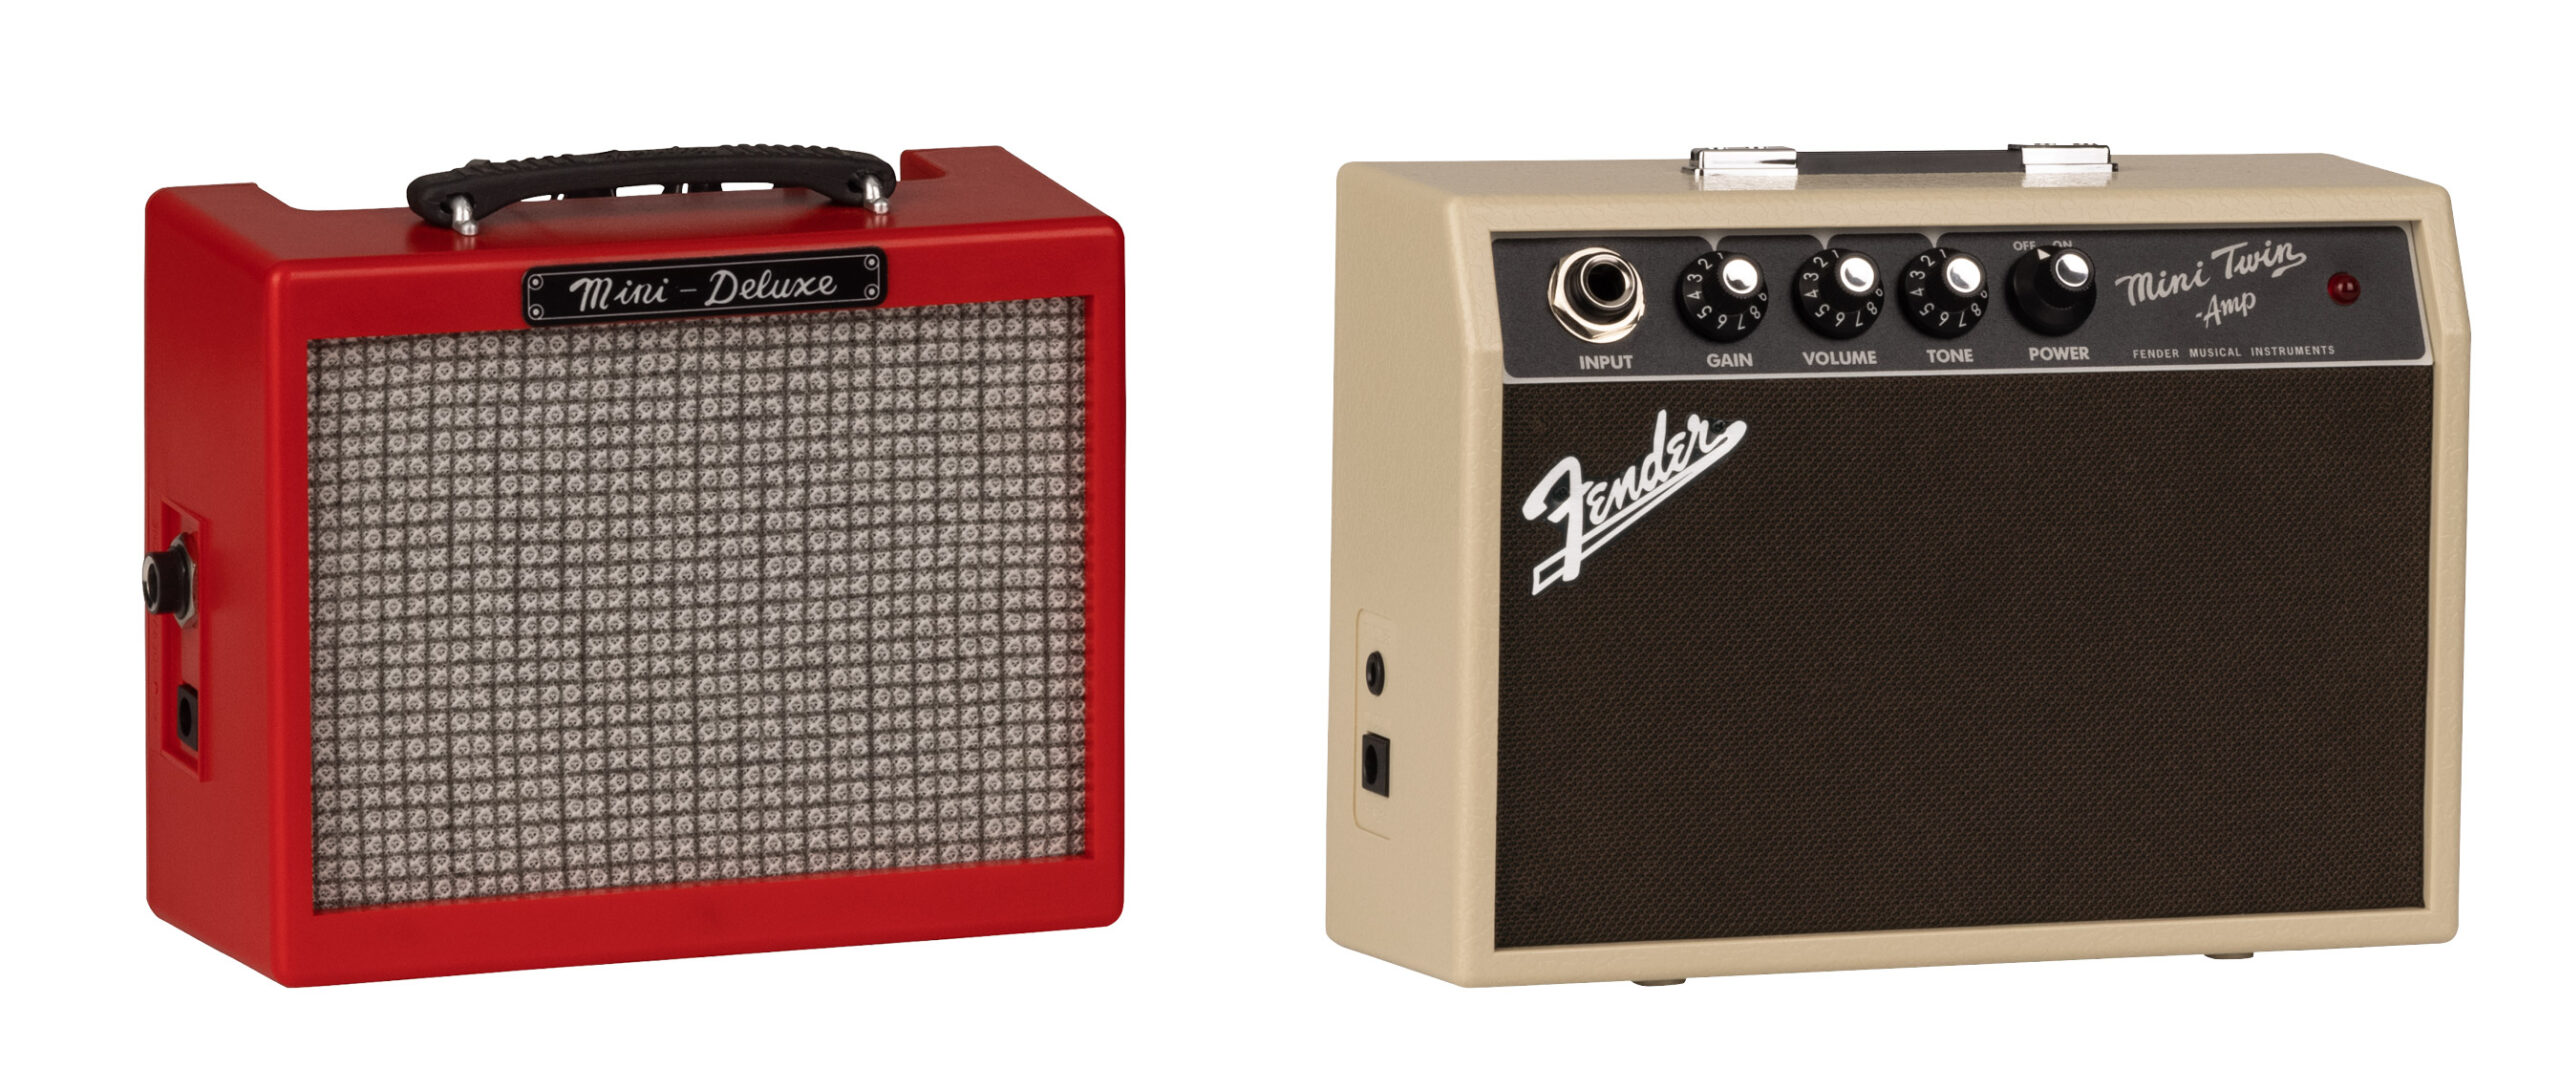 Fender（フェンダー）からミニアンプ「Mini Deluxe Amp Red」と「Mini ’65 Twin Amp Blonde」が発売！